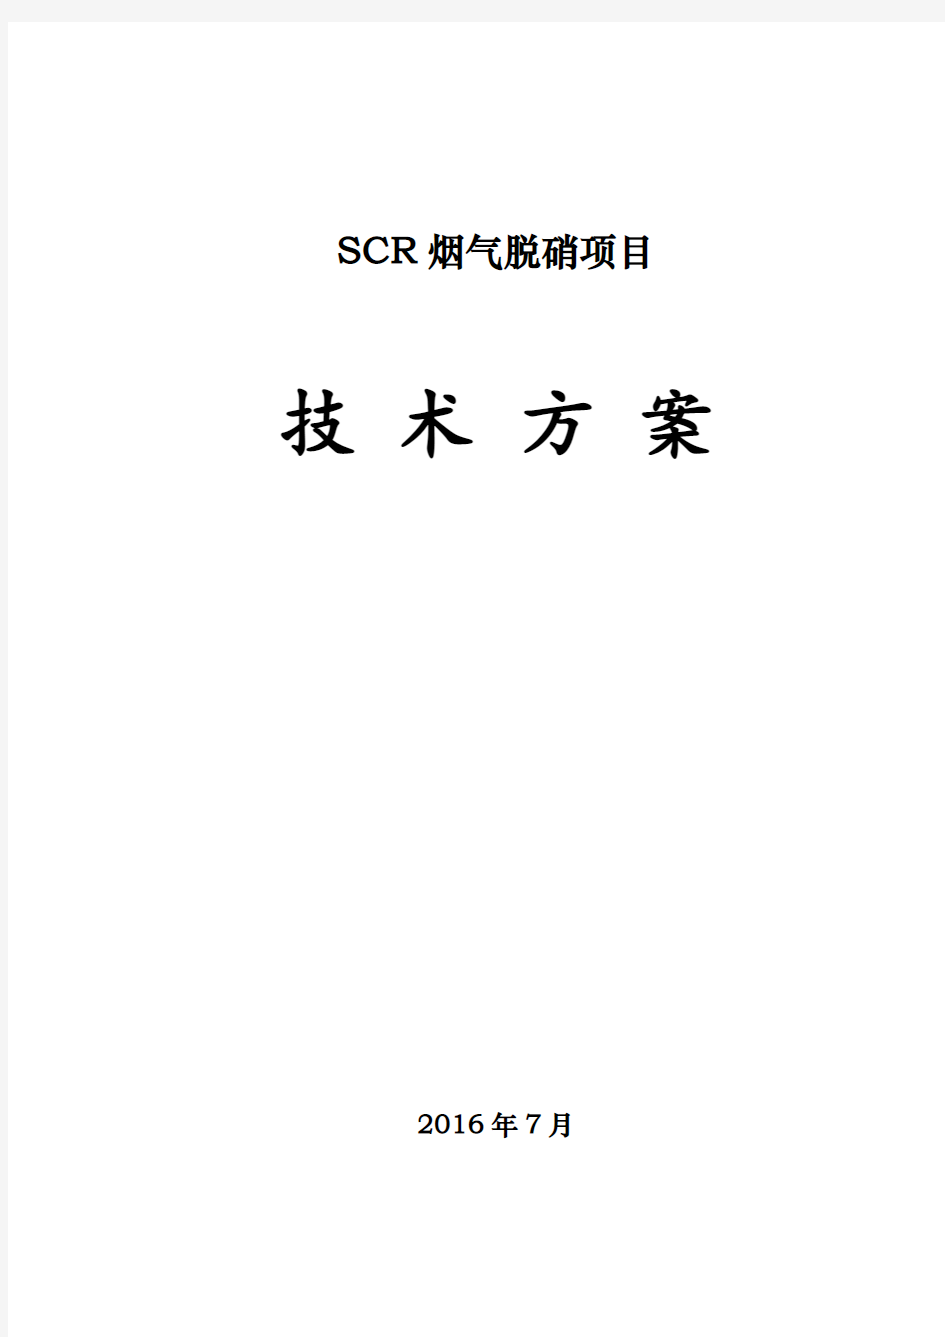 SCR脱硝方案(氨水)16.7.14讲解学习